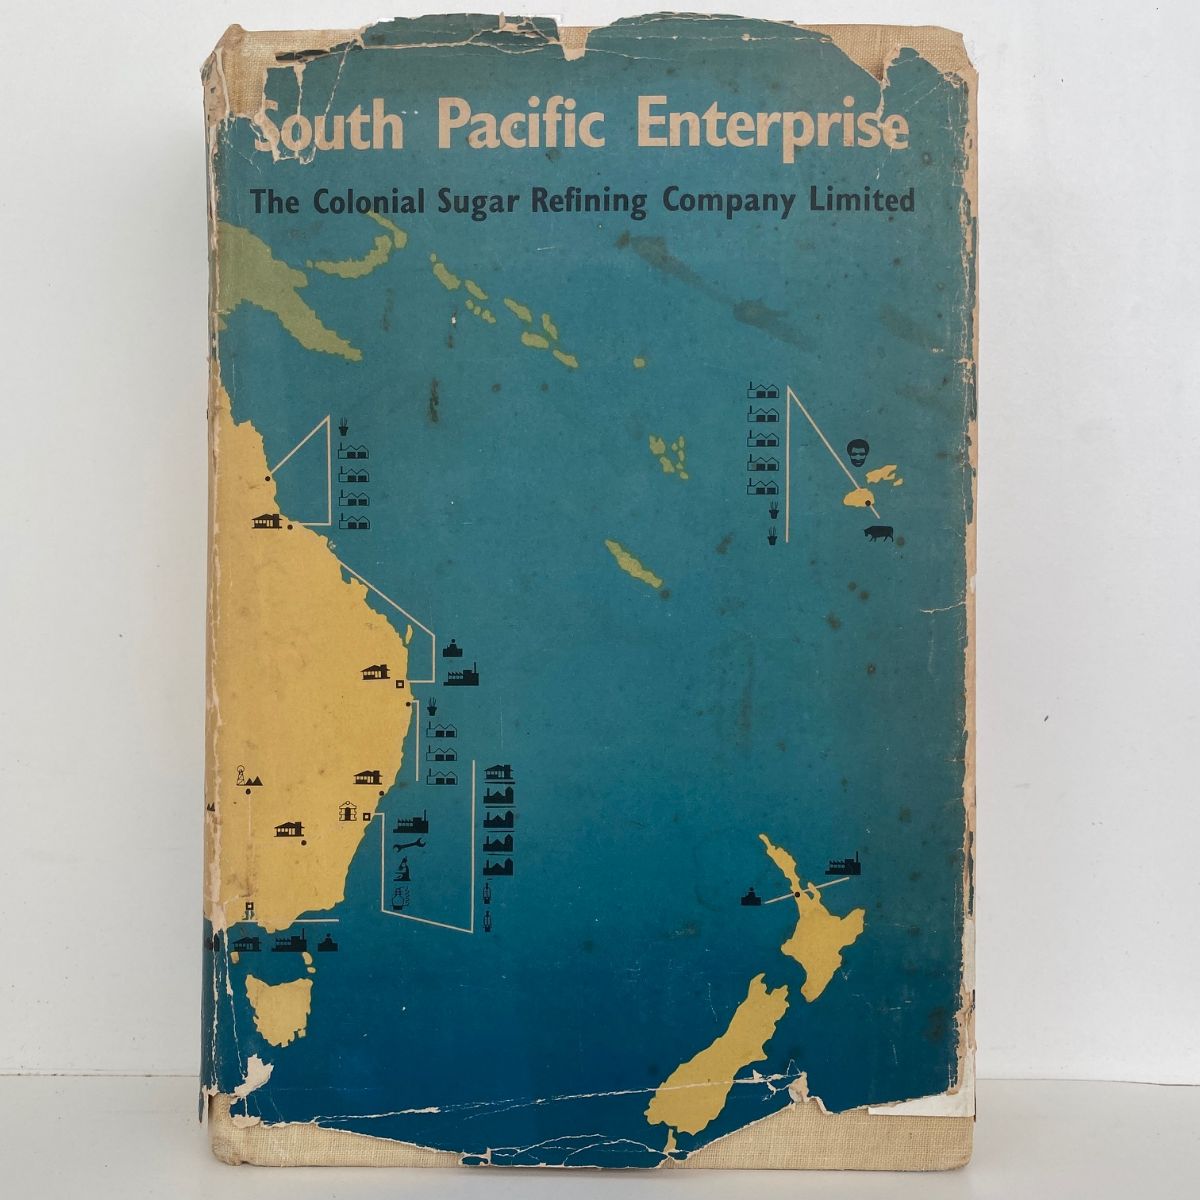 South Pacific Enterprise: The Colonial Sugar Refining Company Ltd